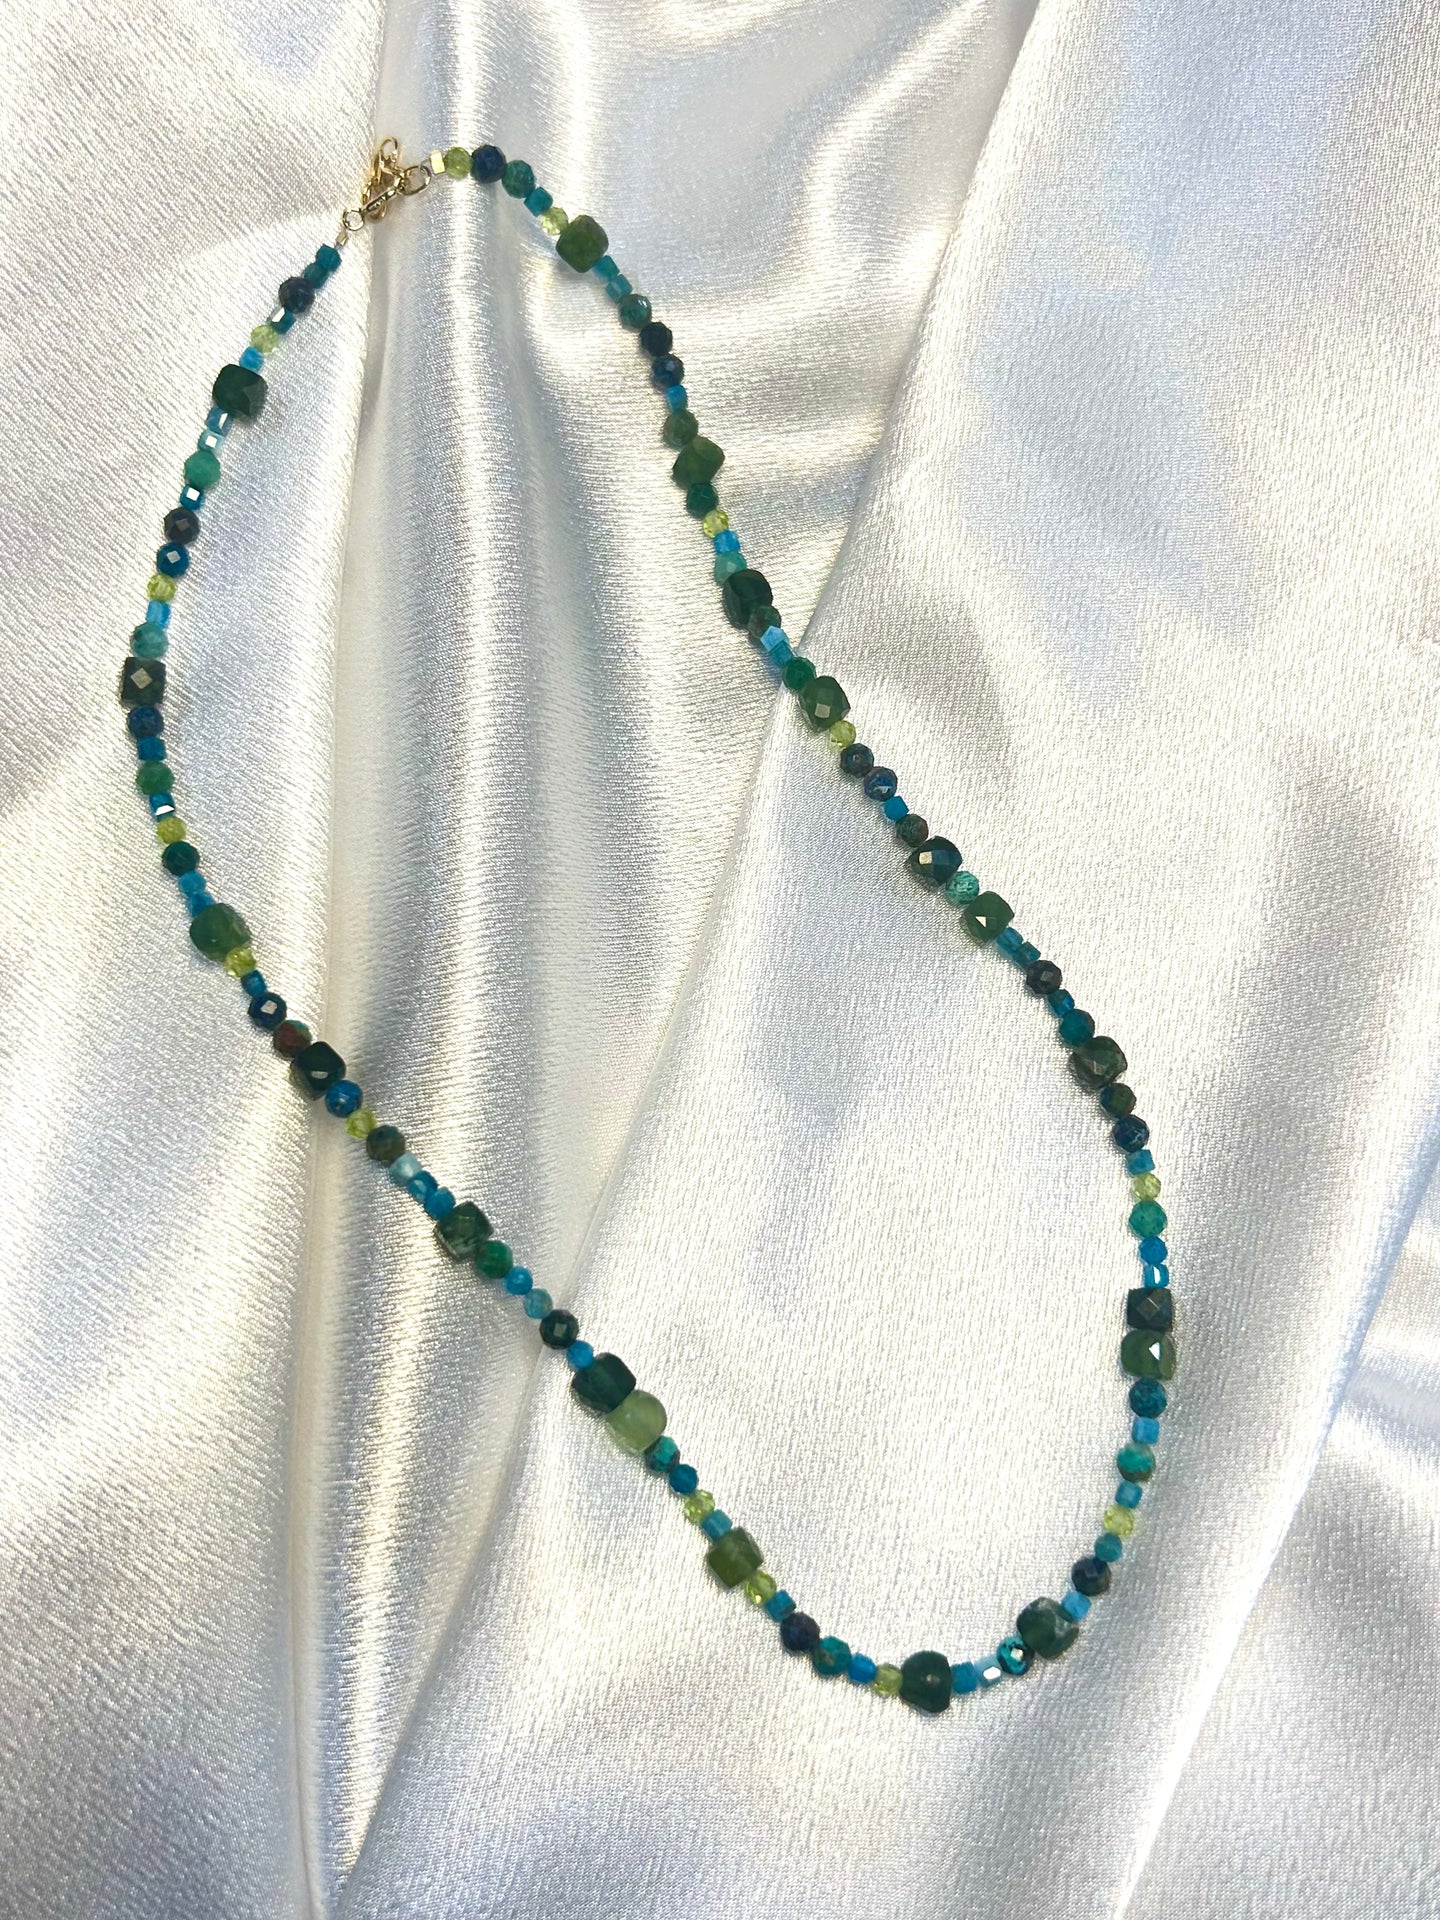 Jade, Peridot and Apatite necklace